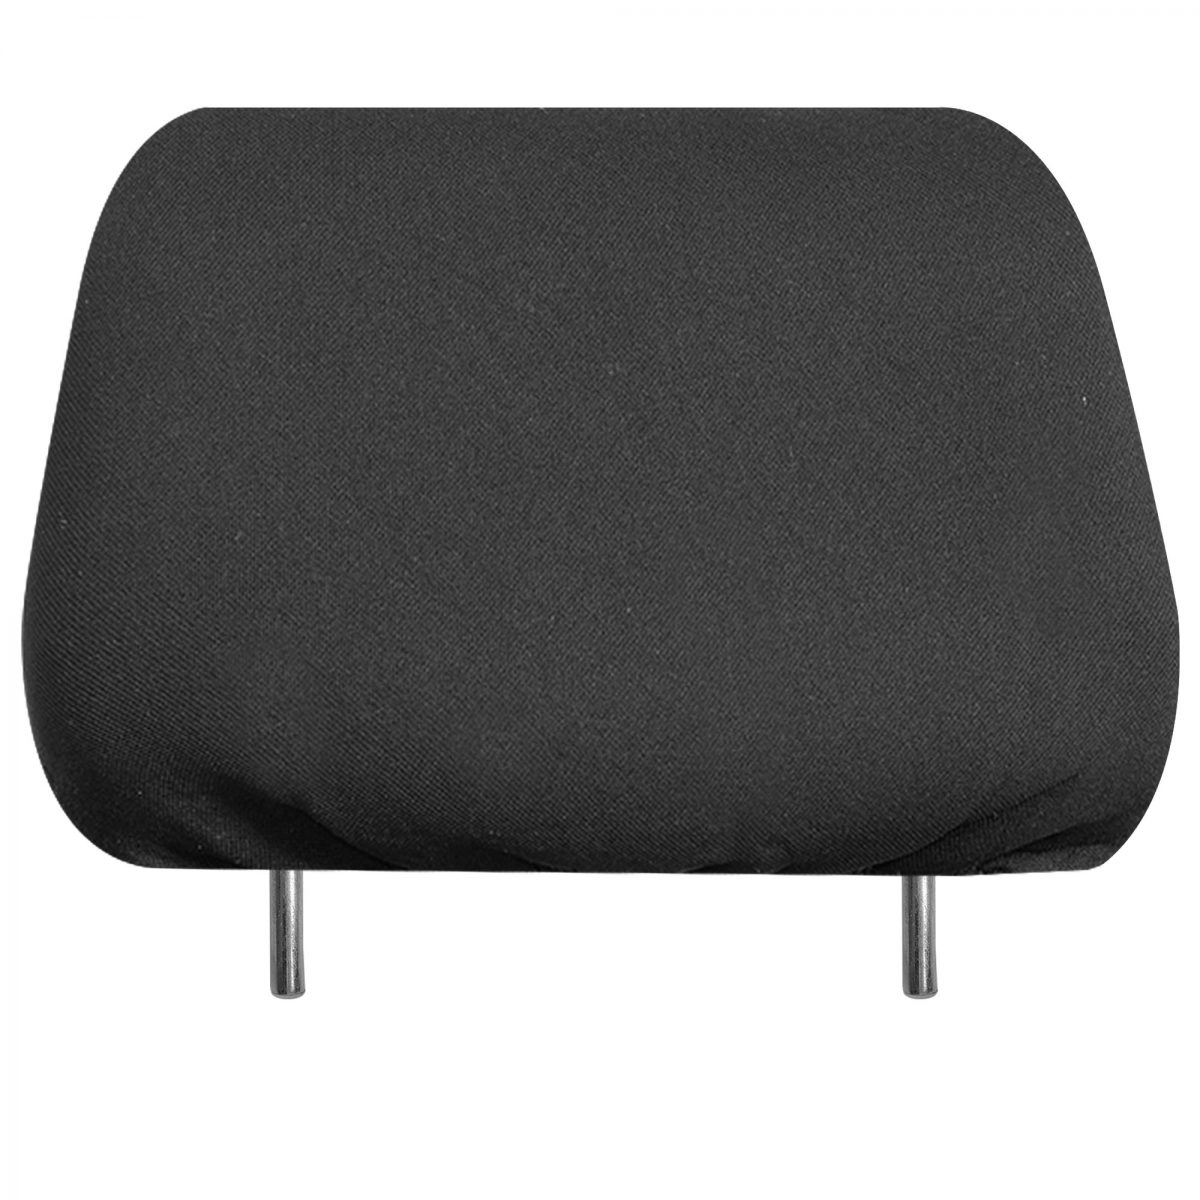 Car Seat Headrest Cover in Flat Cloth Black